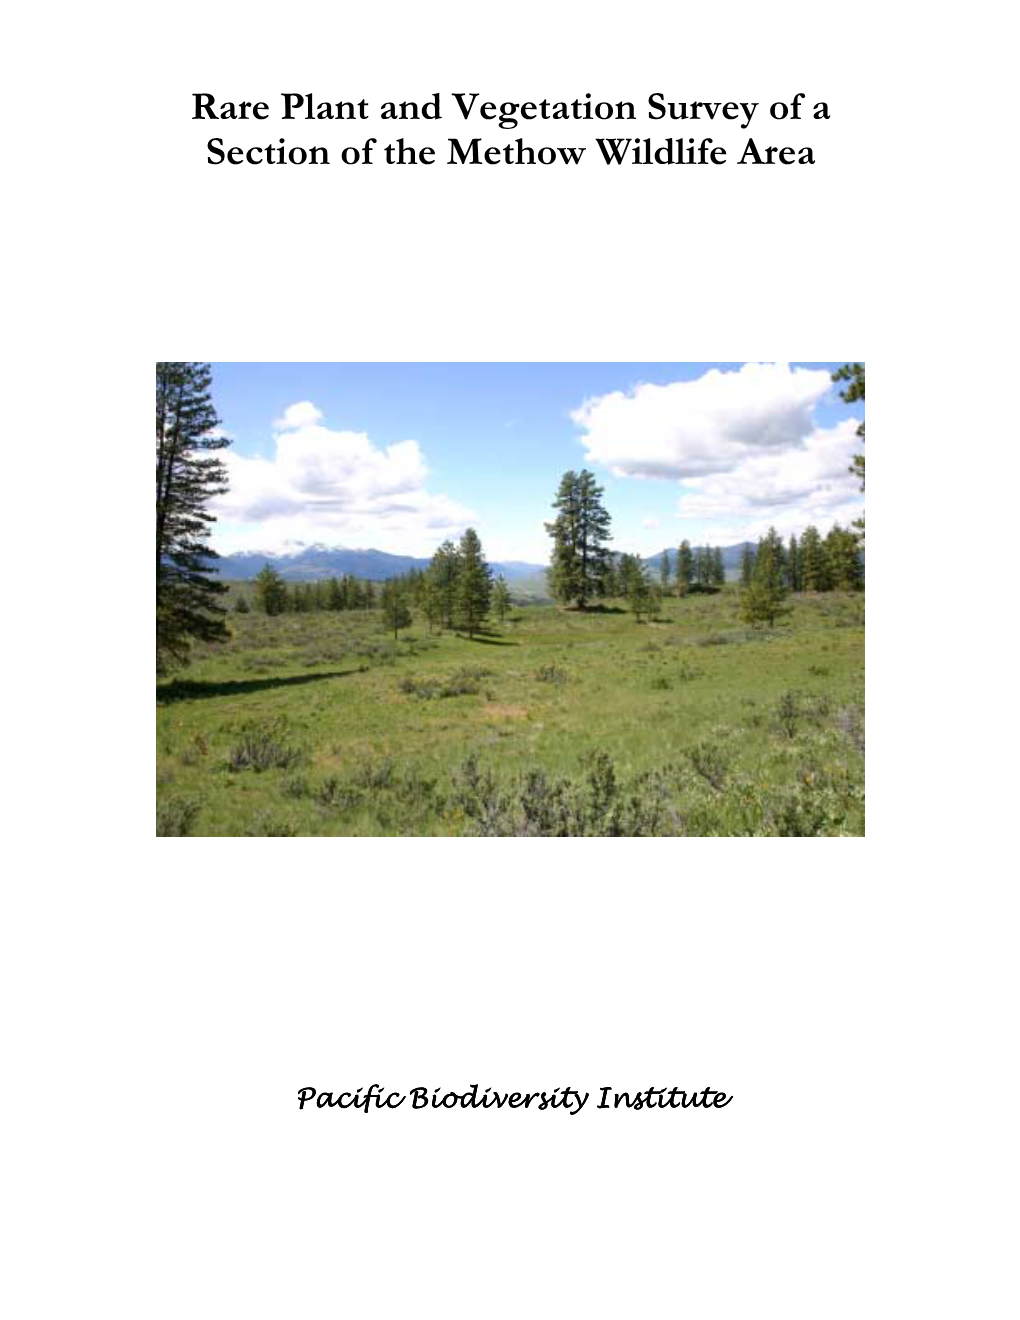 Methow Valley Wildlife Area Rare Plant and Vegetation Survey, 2006